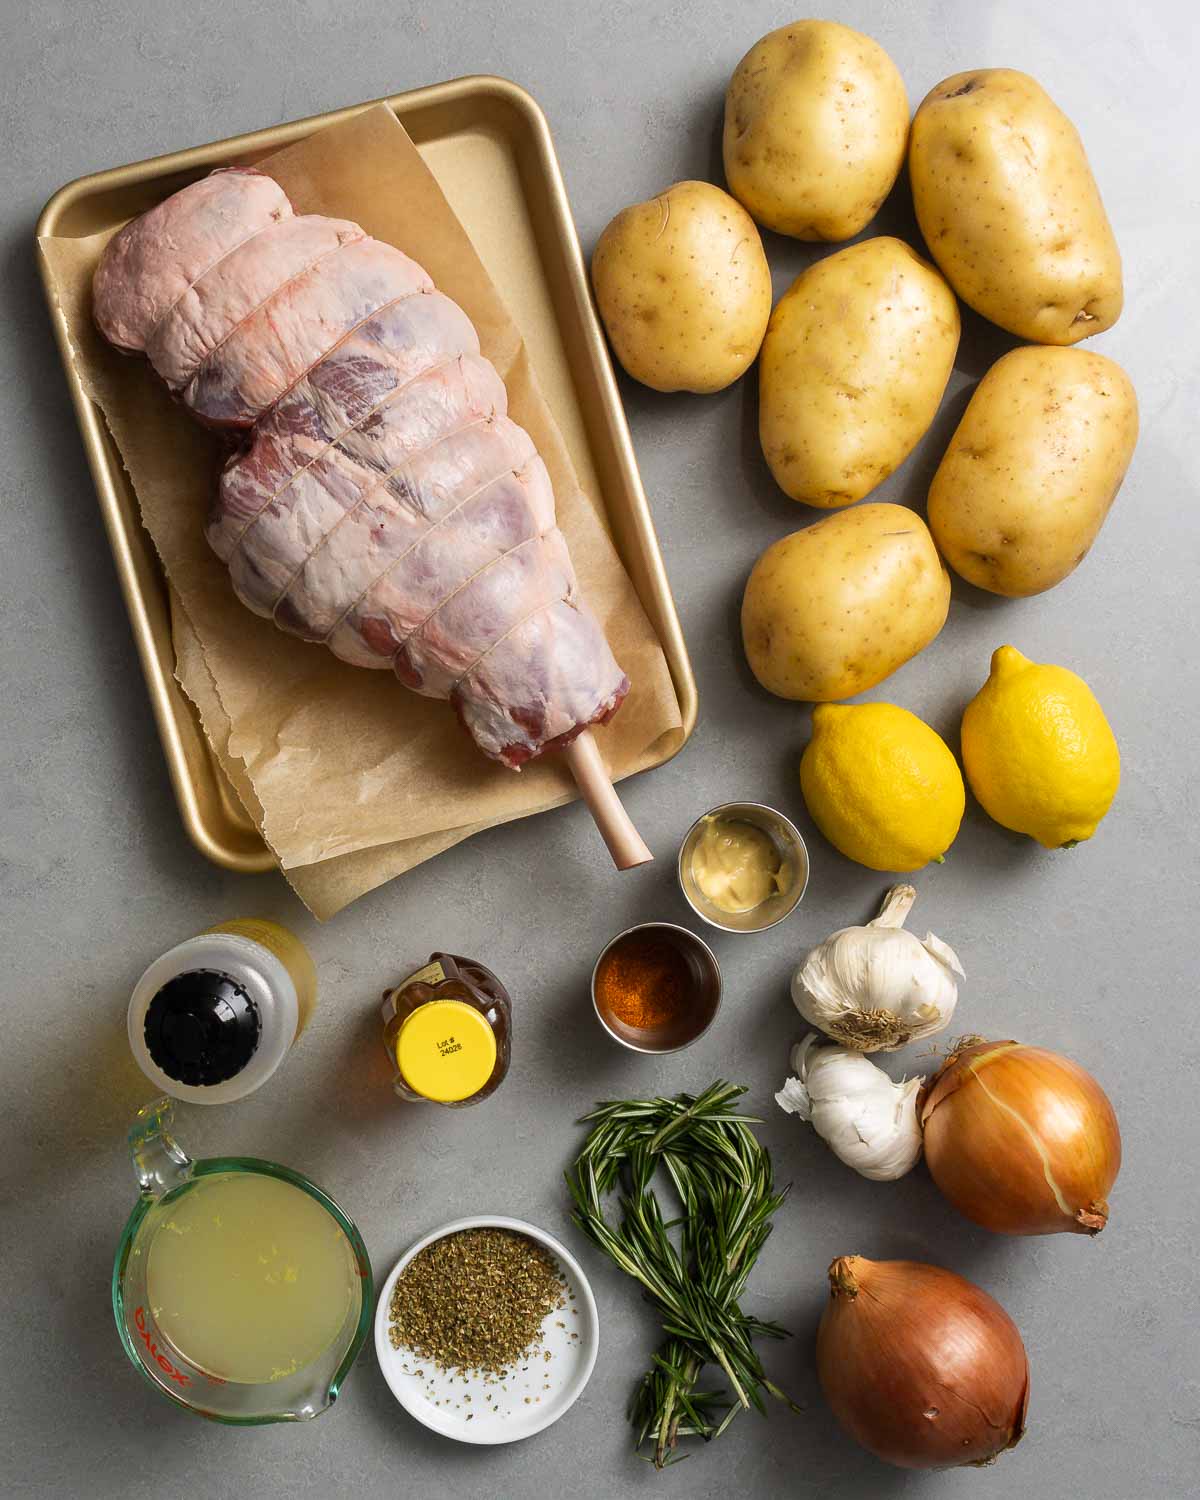 Ingredients shown: leg of lamb, potatoes, olive oil, honey, paprika, Dijon, lemons, garlic, chicken stock, oregano, and rosemary.